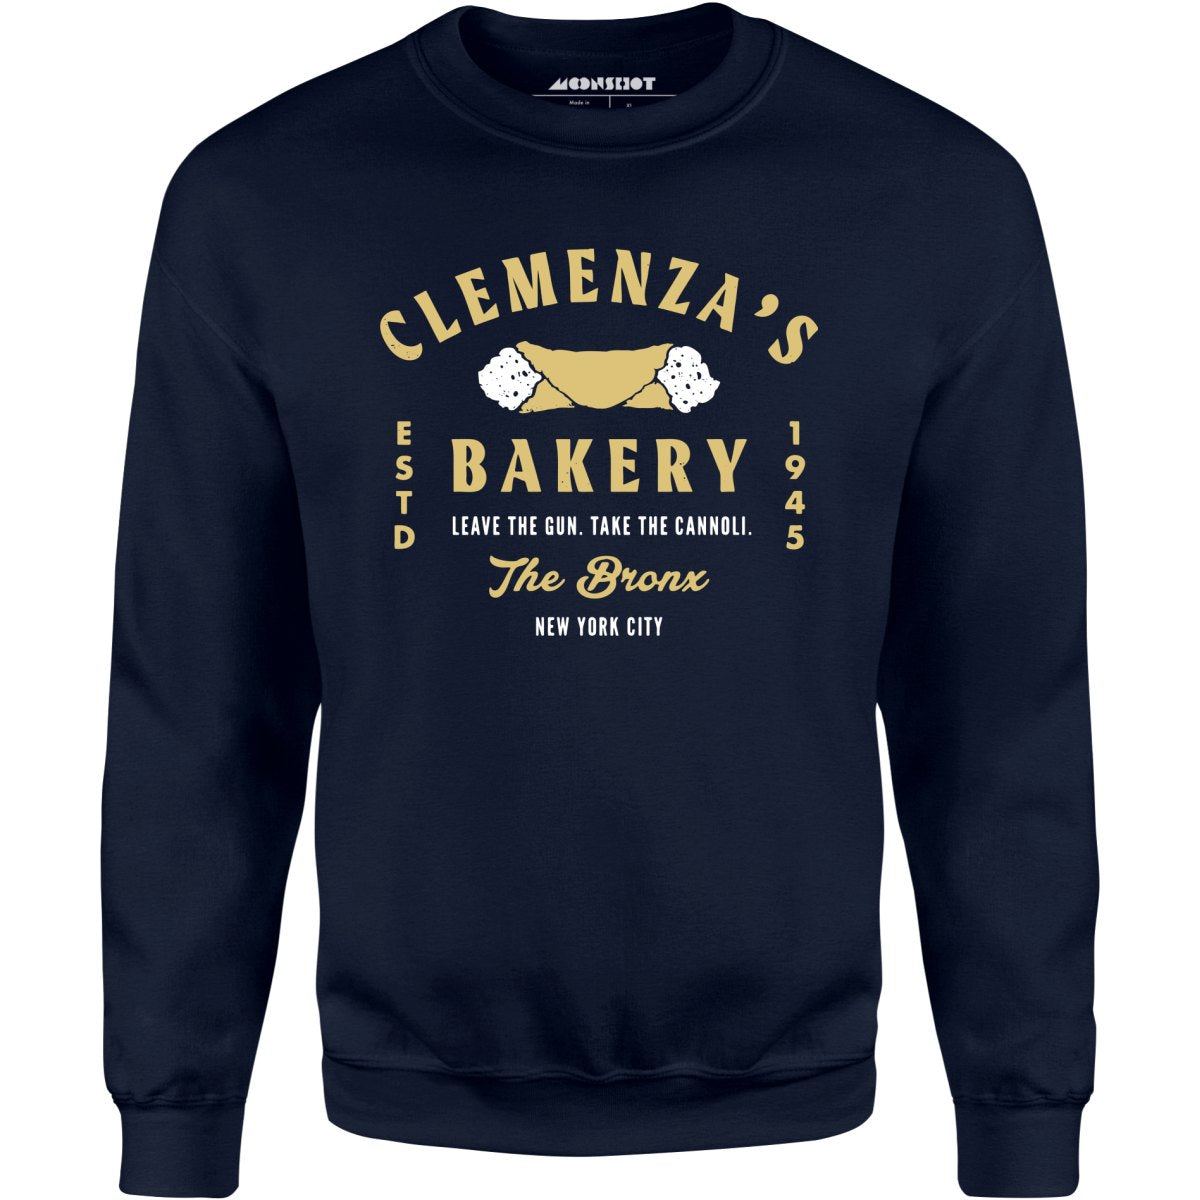 Clemenza's Bakery - Unisex Sweatshirt